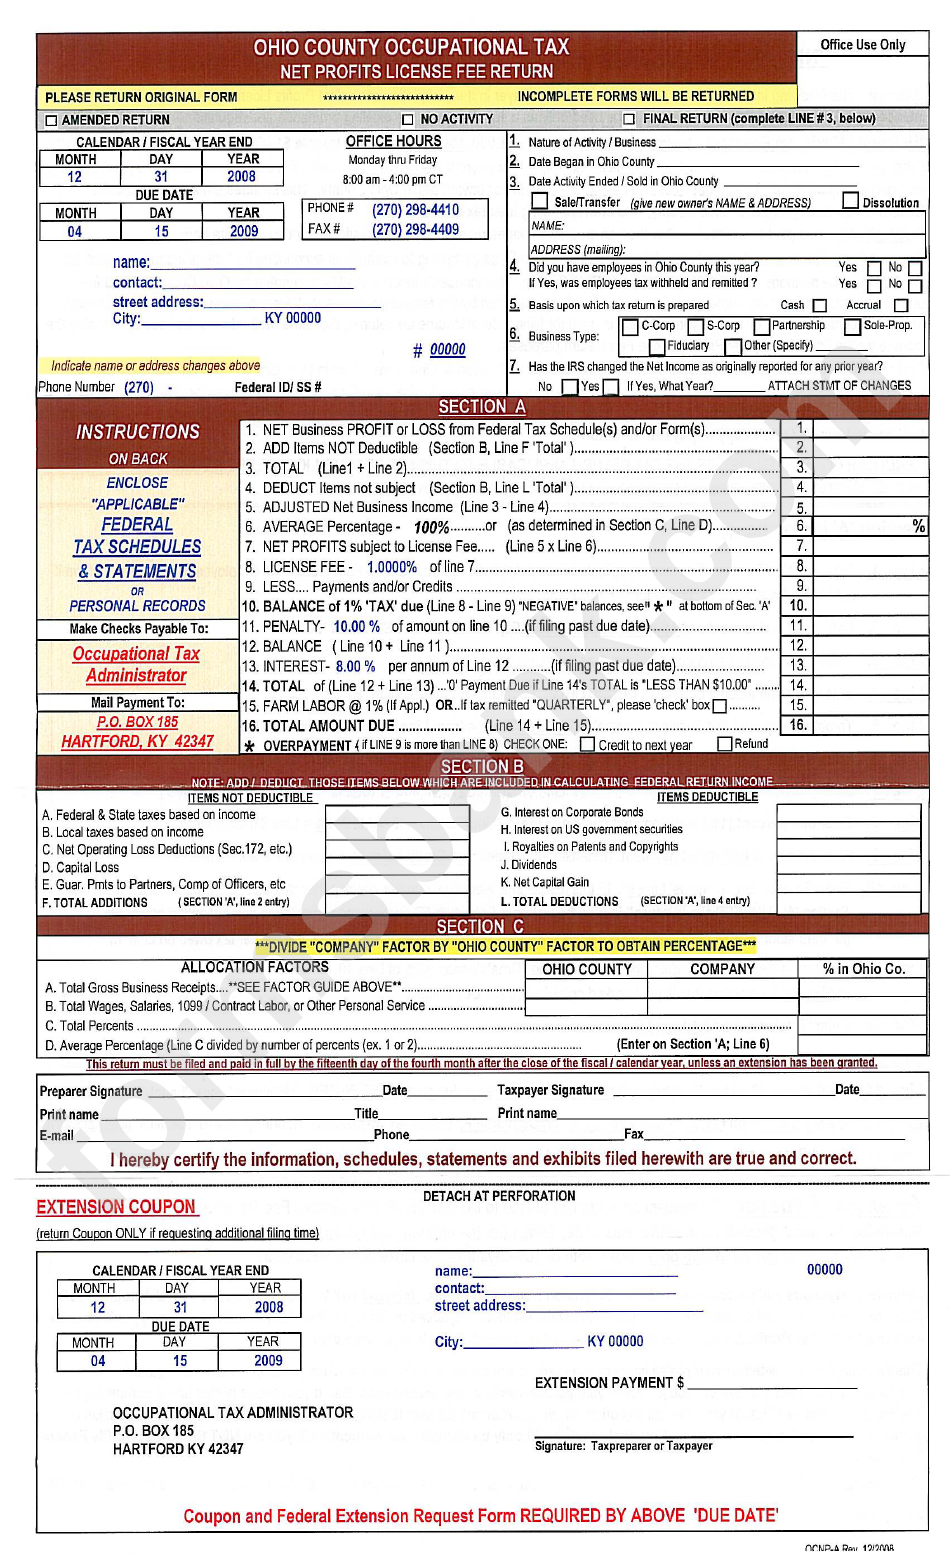 Form Ocnp-A - Ohio County Occupational Tax Net Profits License Fee Return Form December 2008